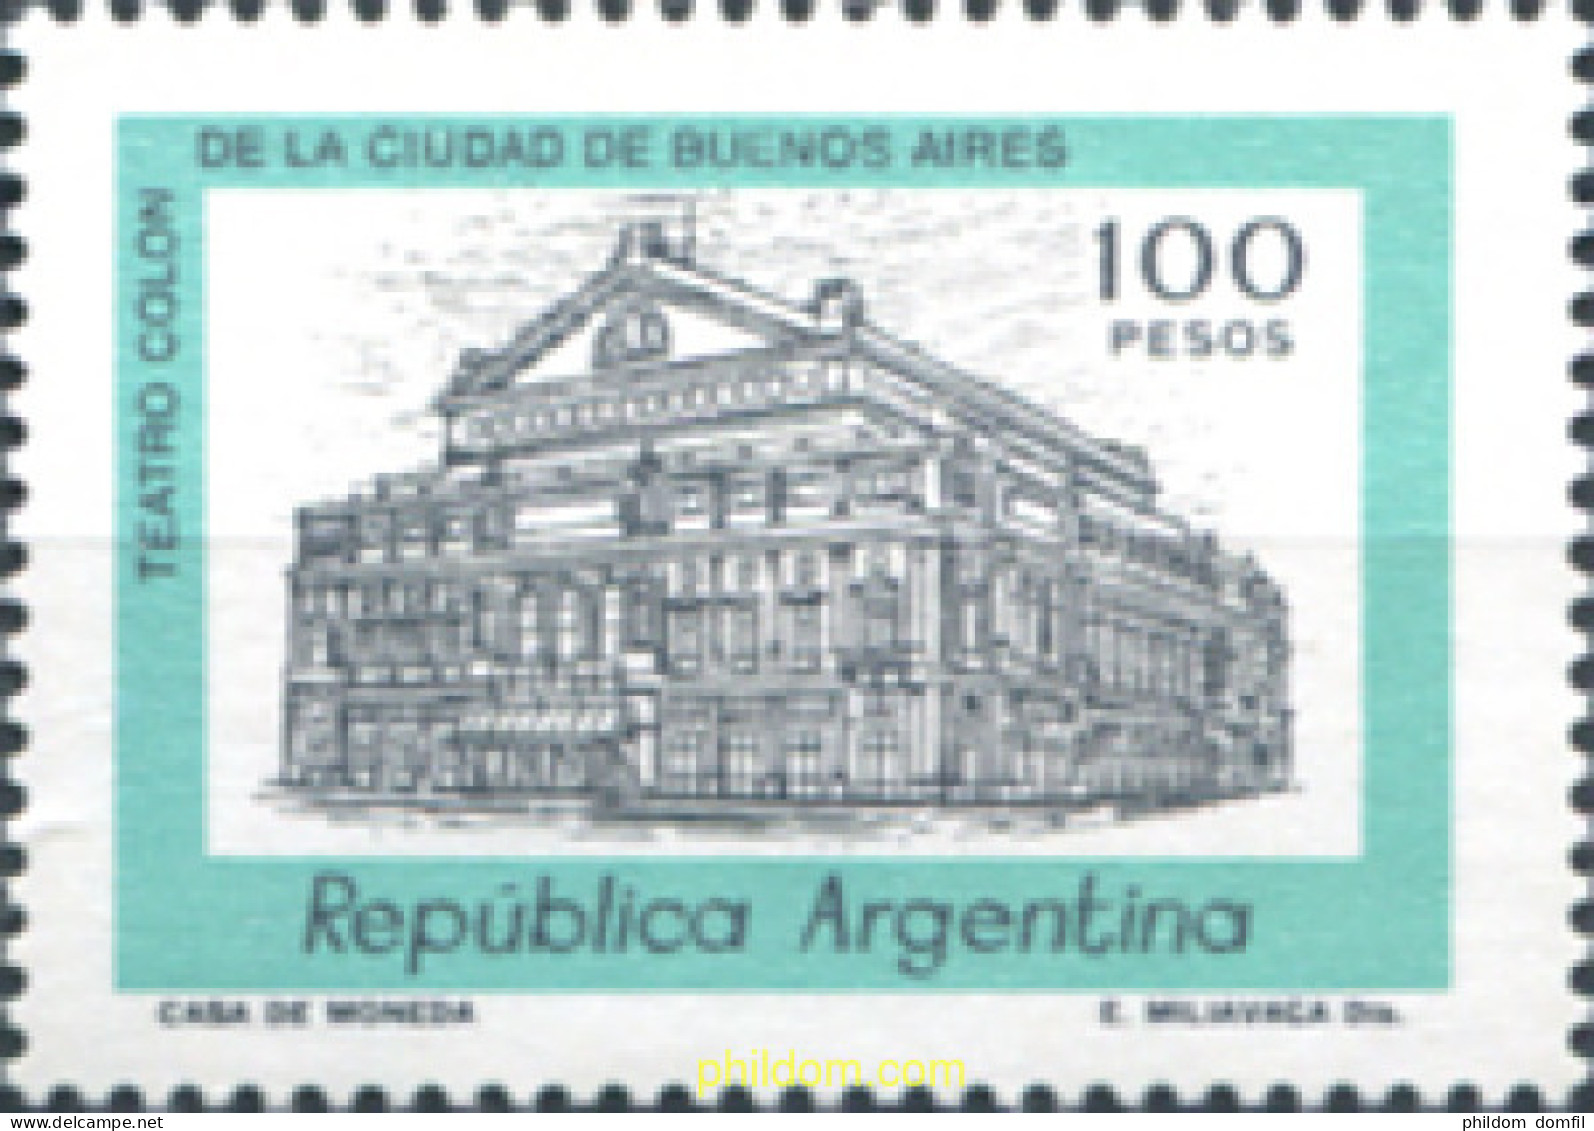 283461 MNH ARGENTINA 1981 SERIE BASICA - Unused Stamps